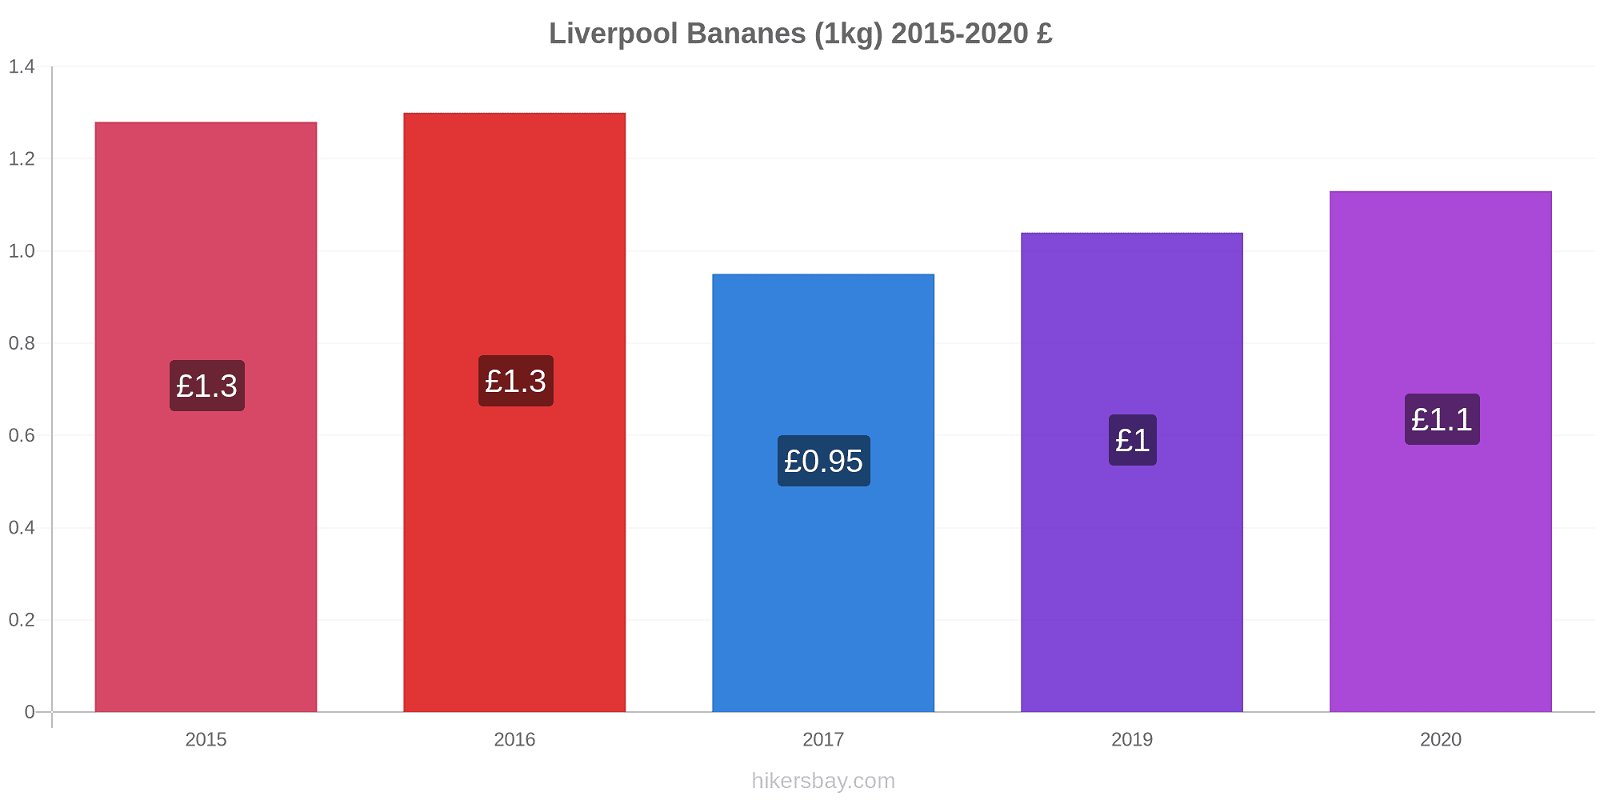 Liverpool changements de prix Bananes (1kg) hikersbay.com